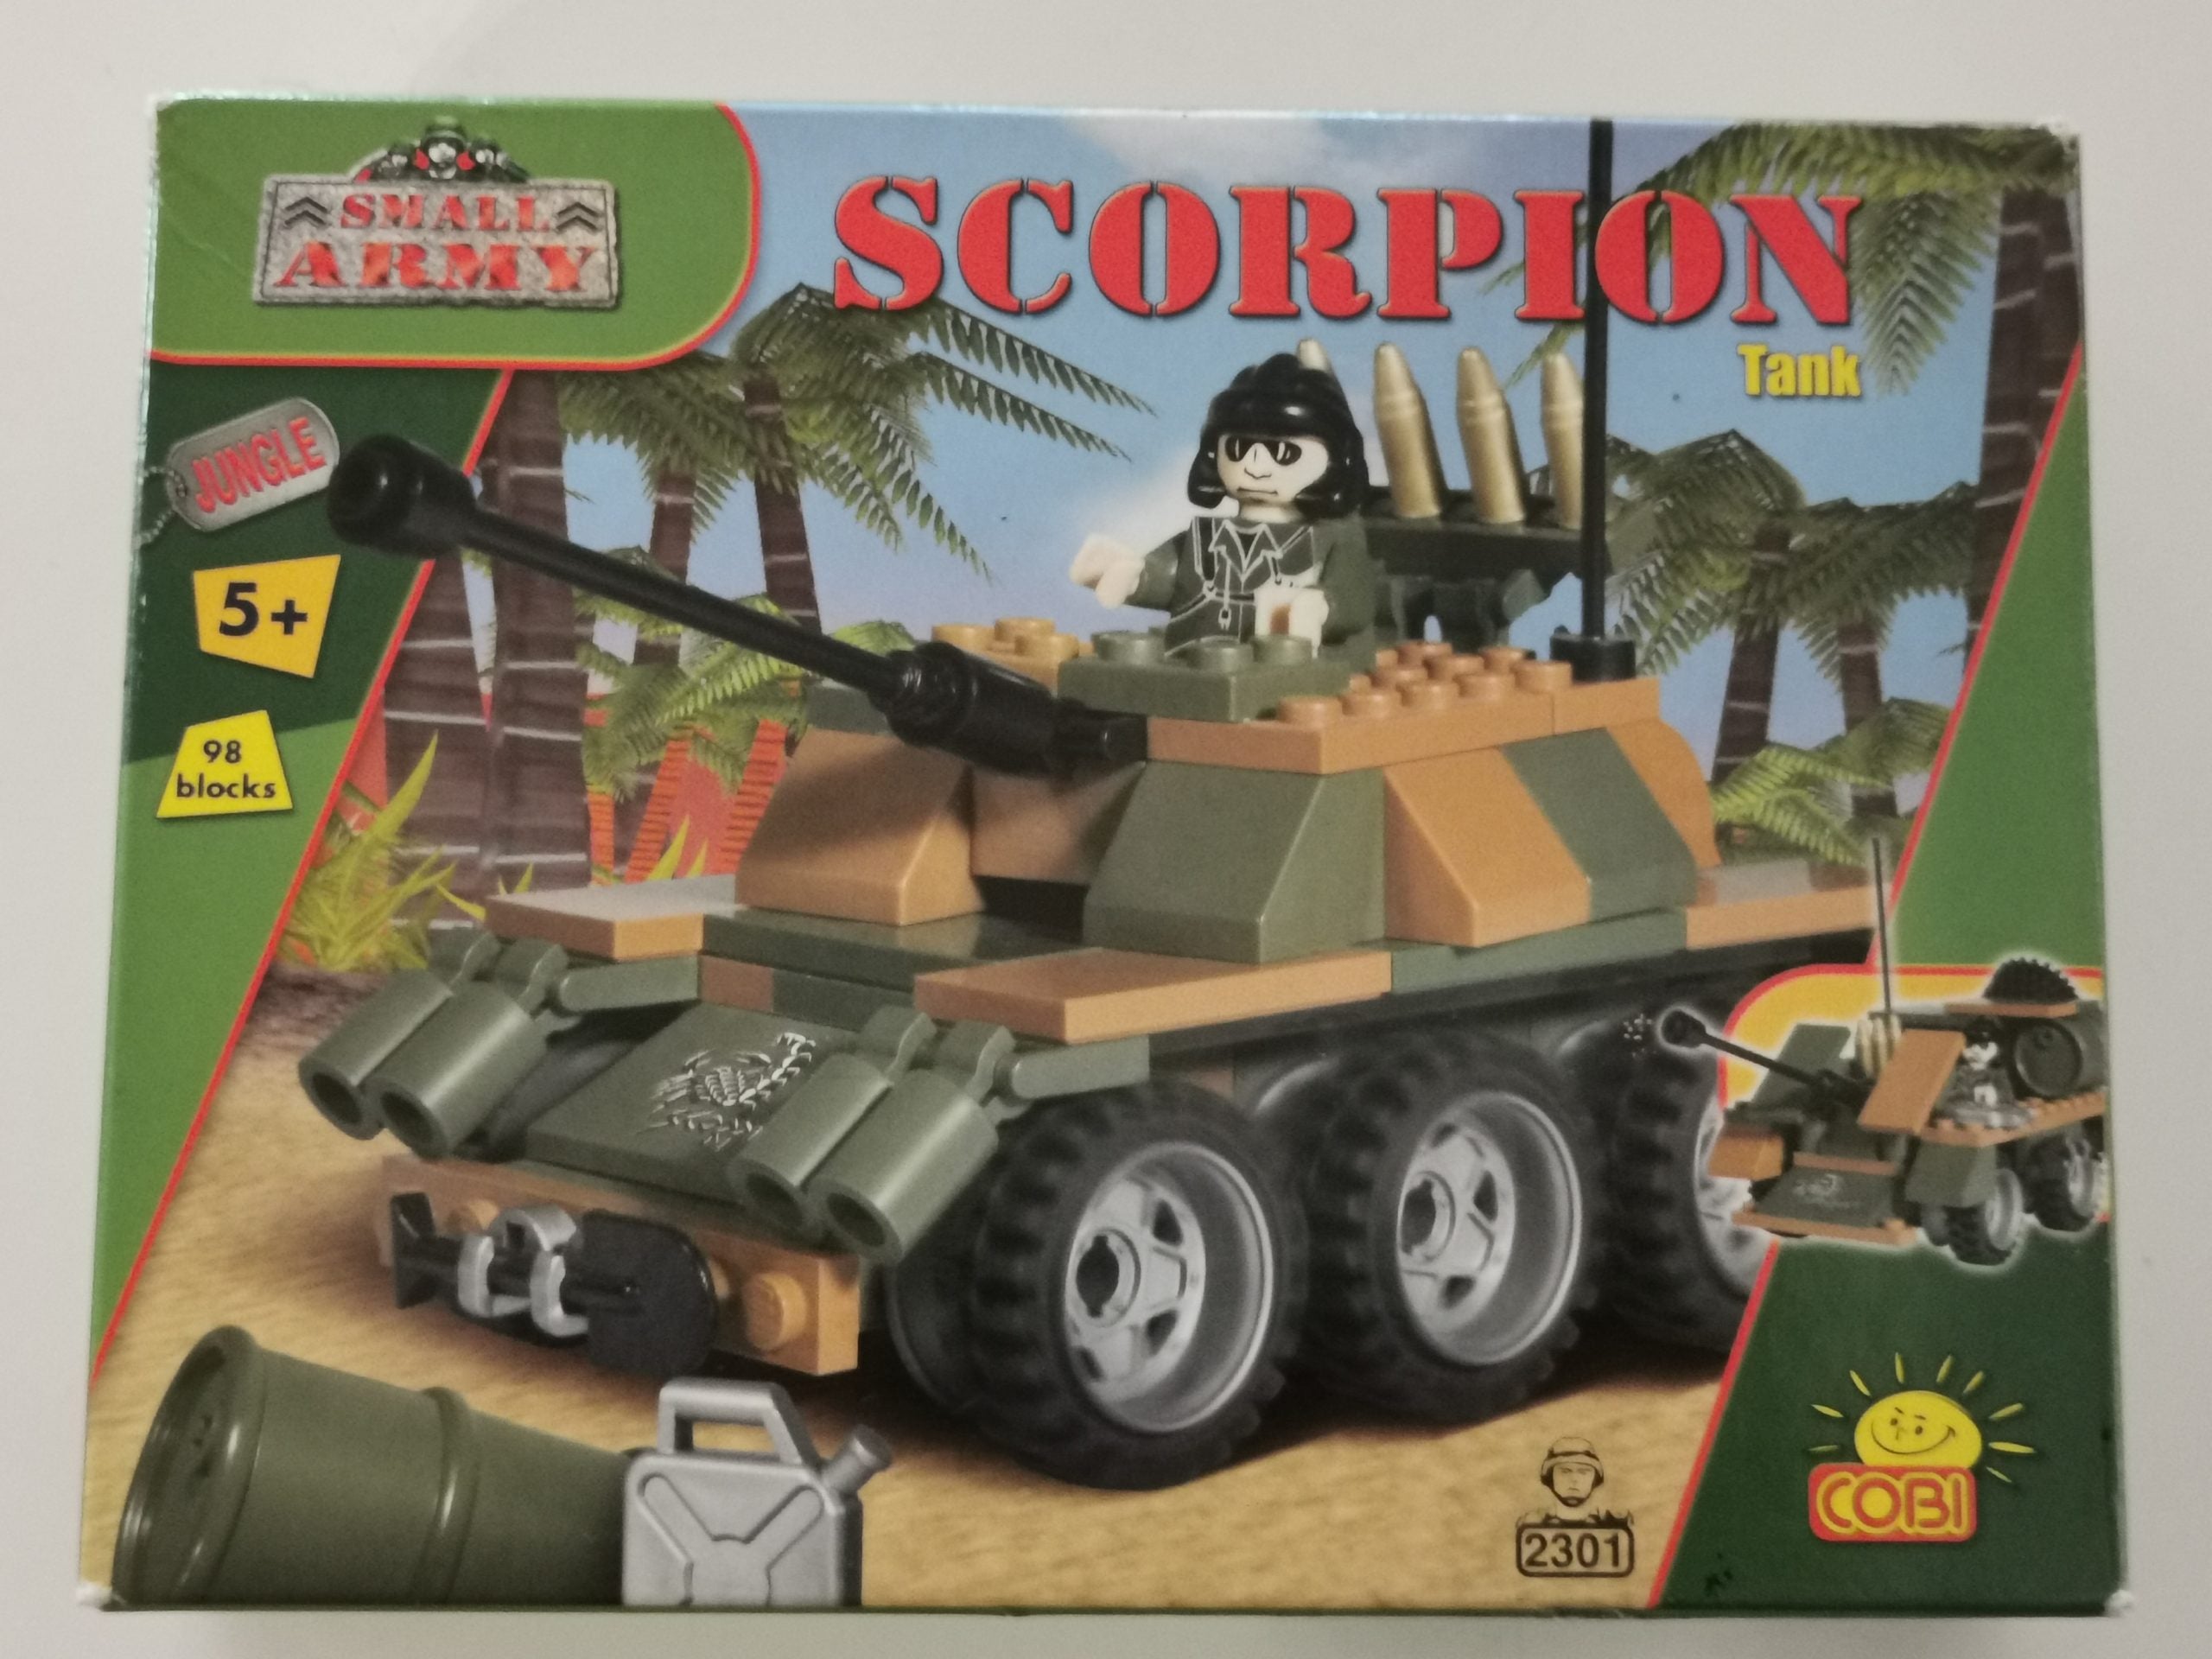 Cobi 2301 Scorpion Tank gebraucht